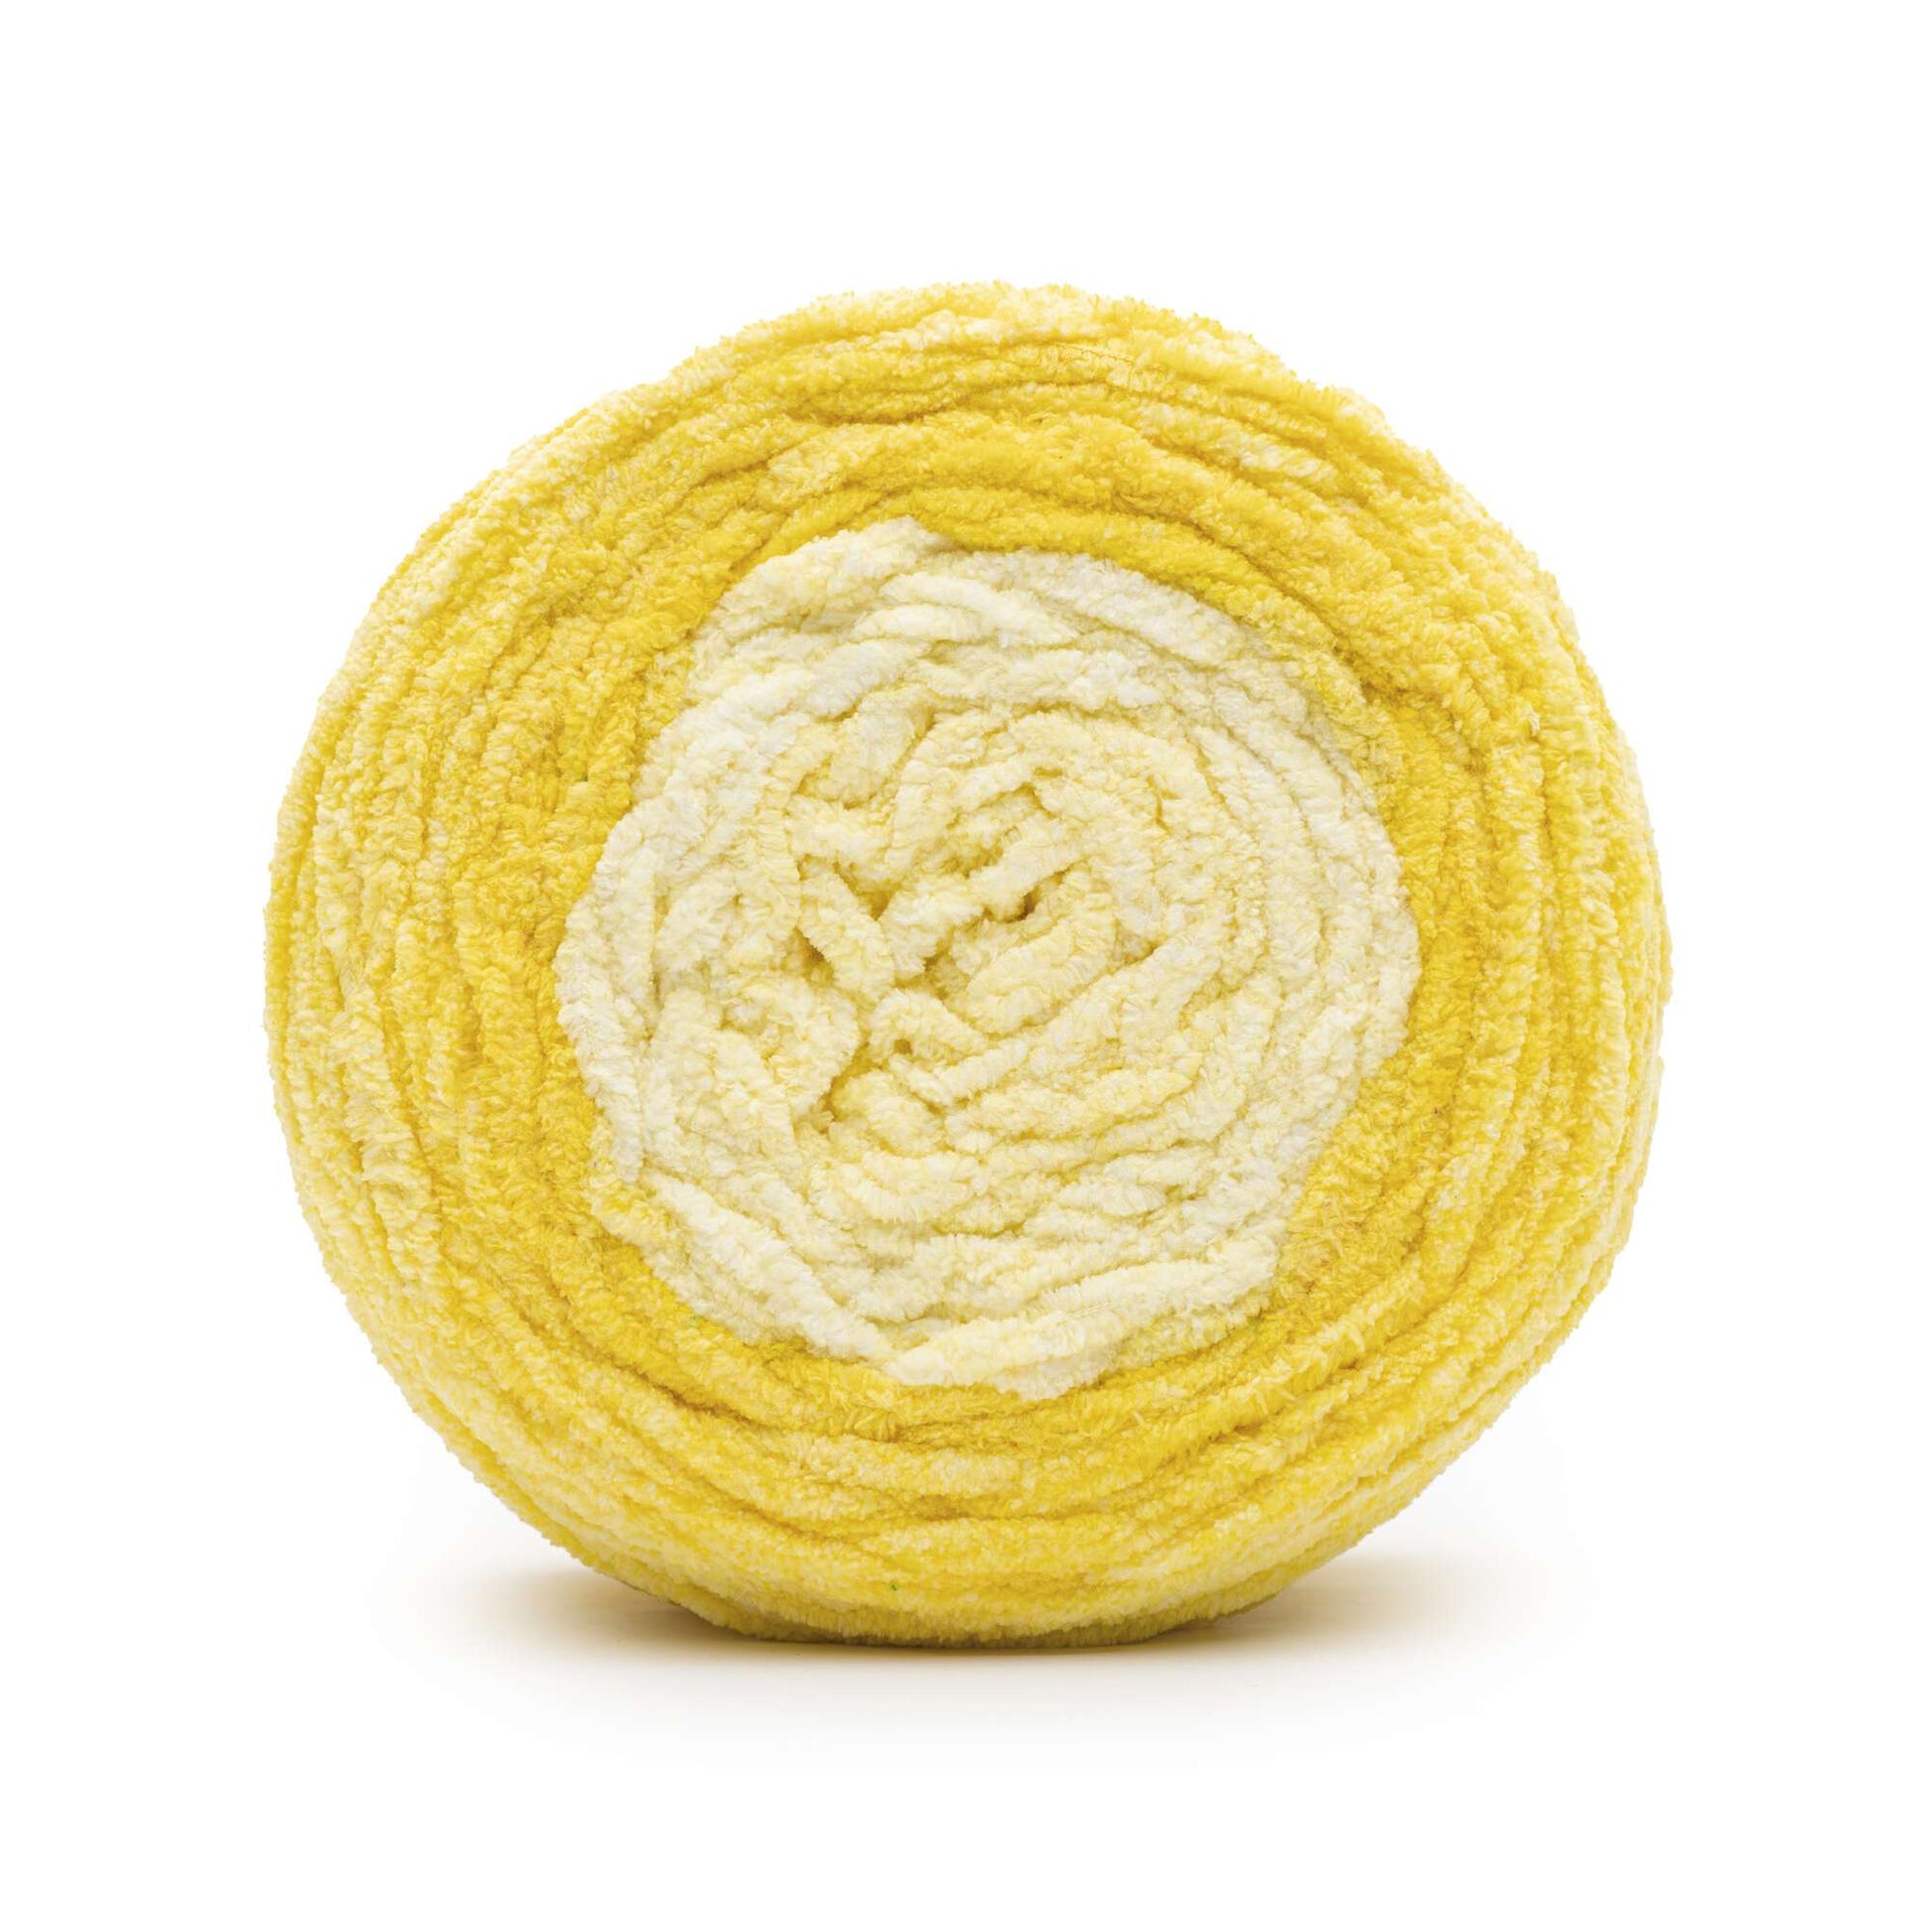 Spinrite Baby Blanket Yarn, Yellow